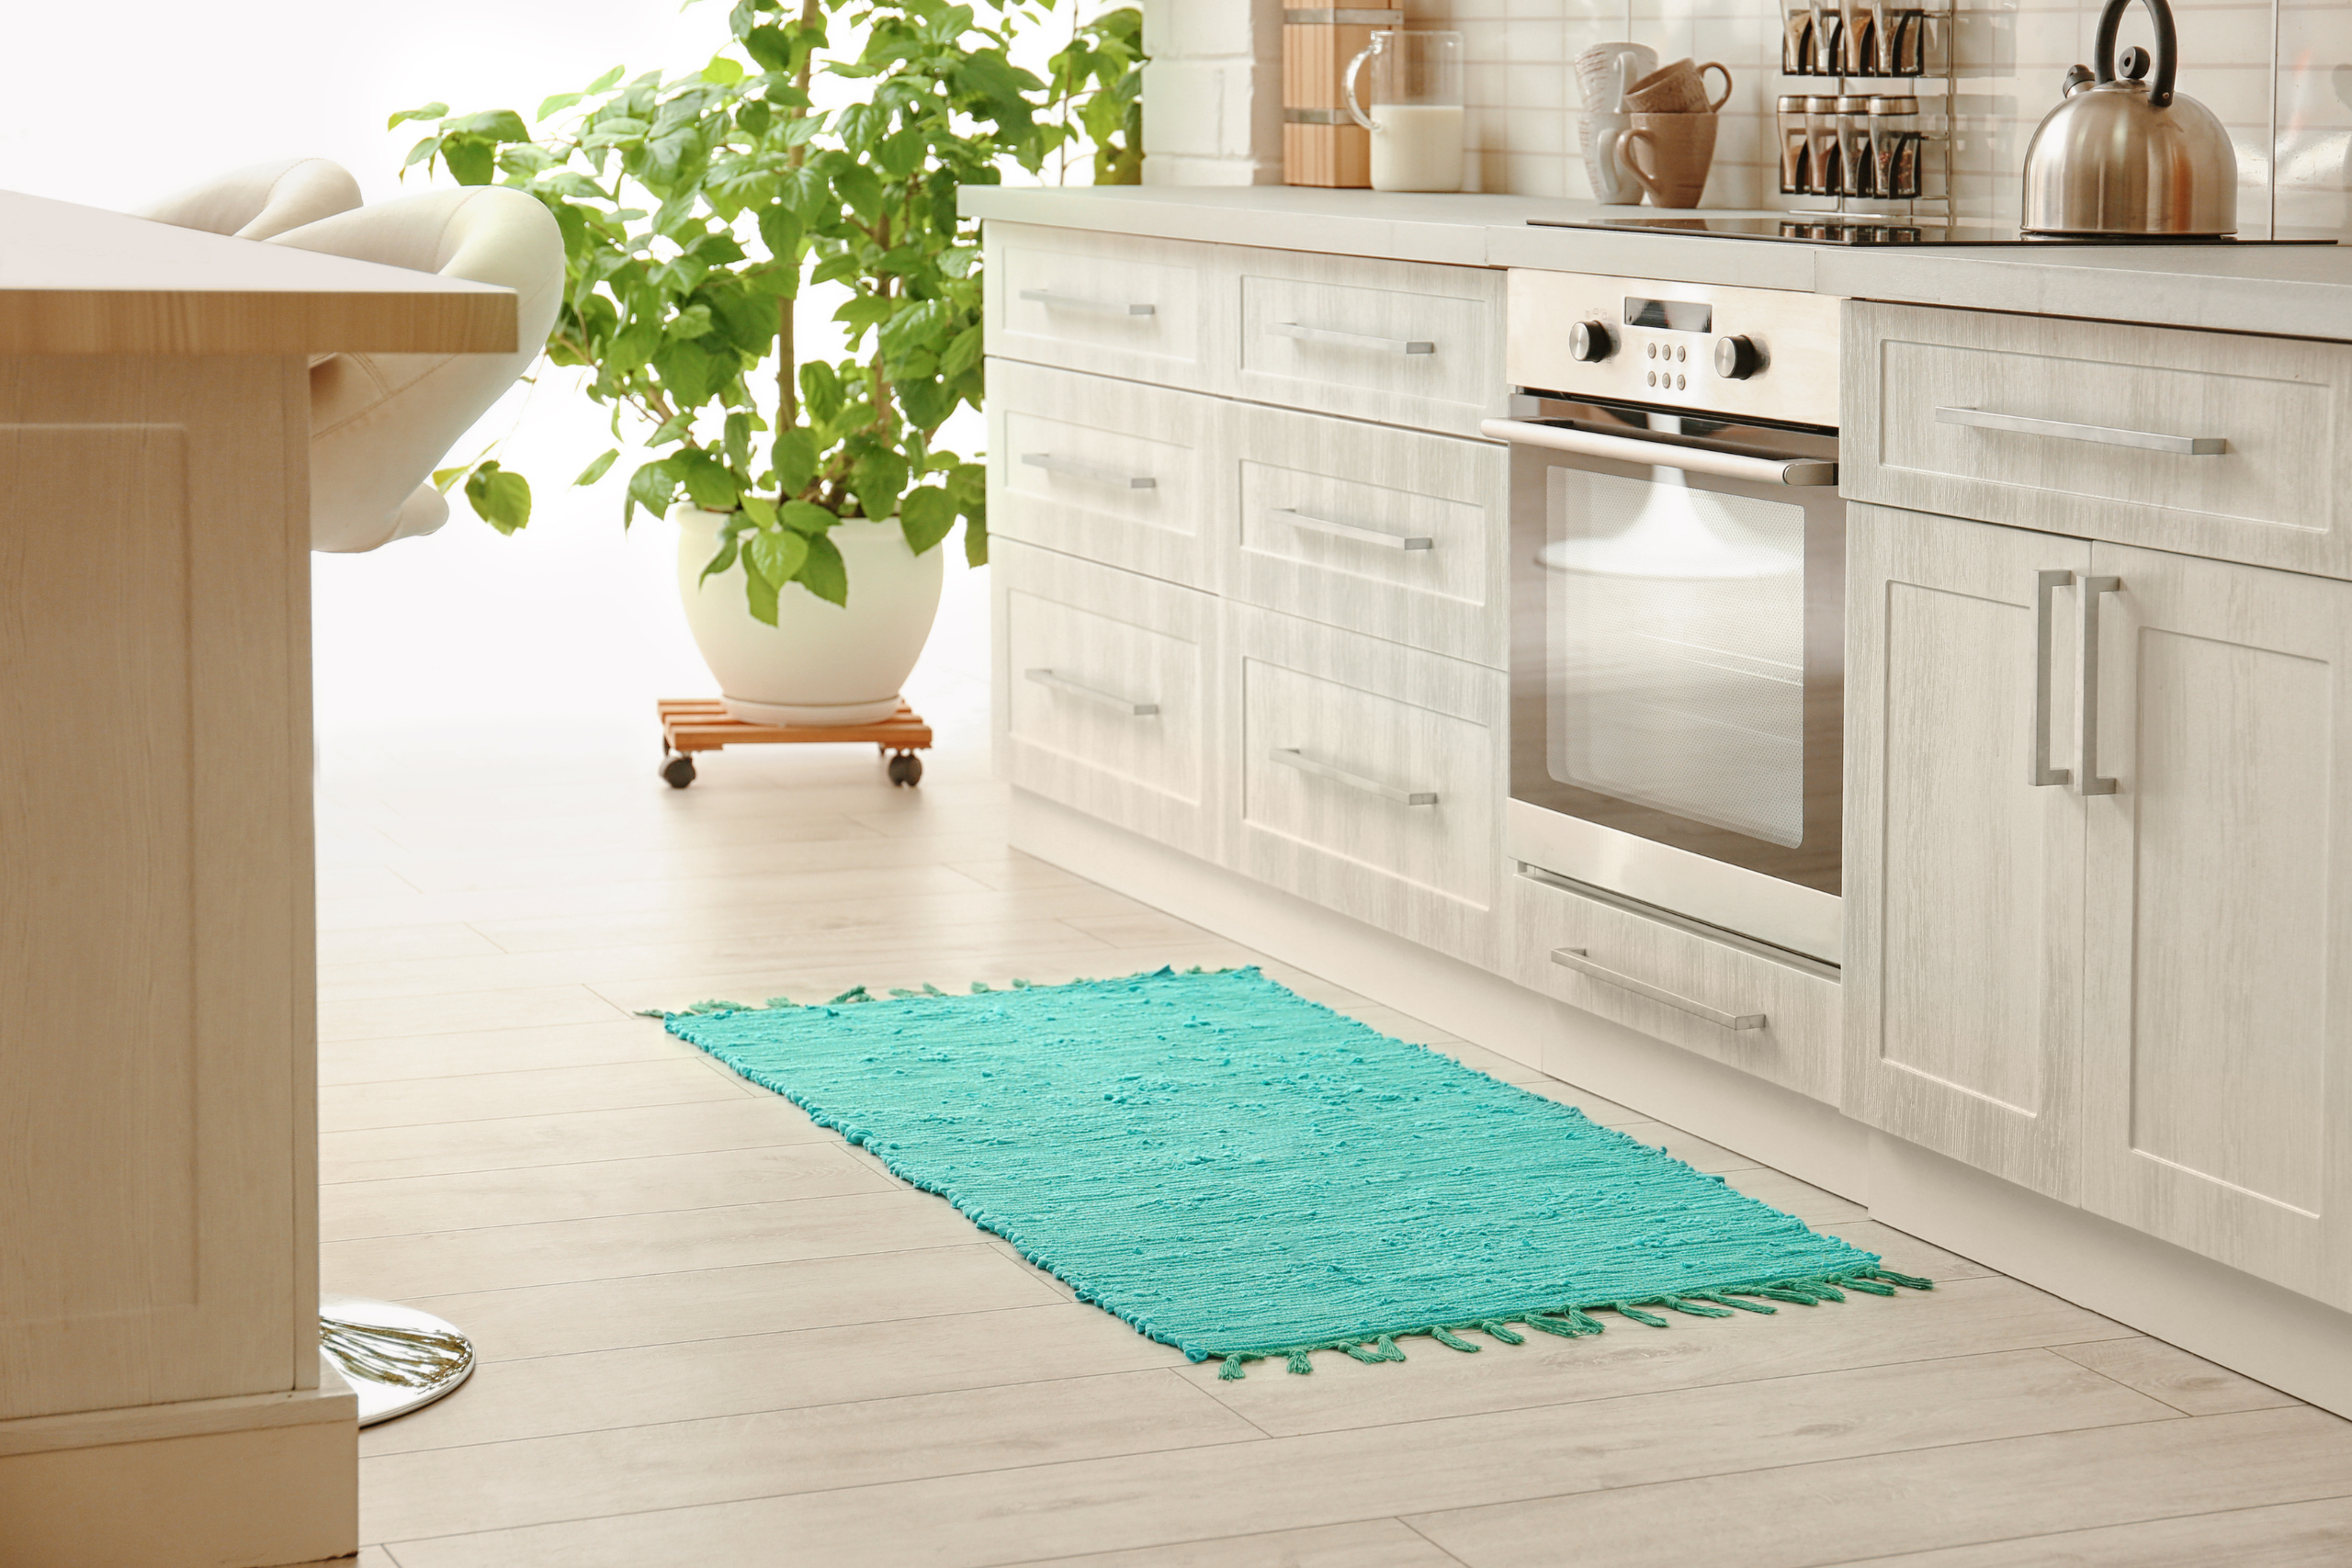 kithcen-flooring-with-rug